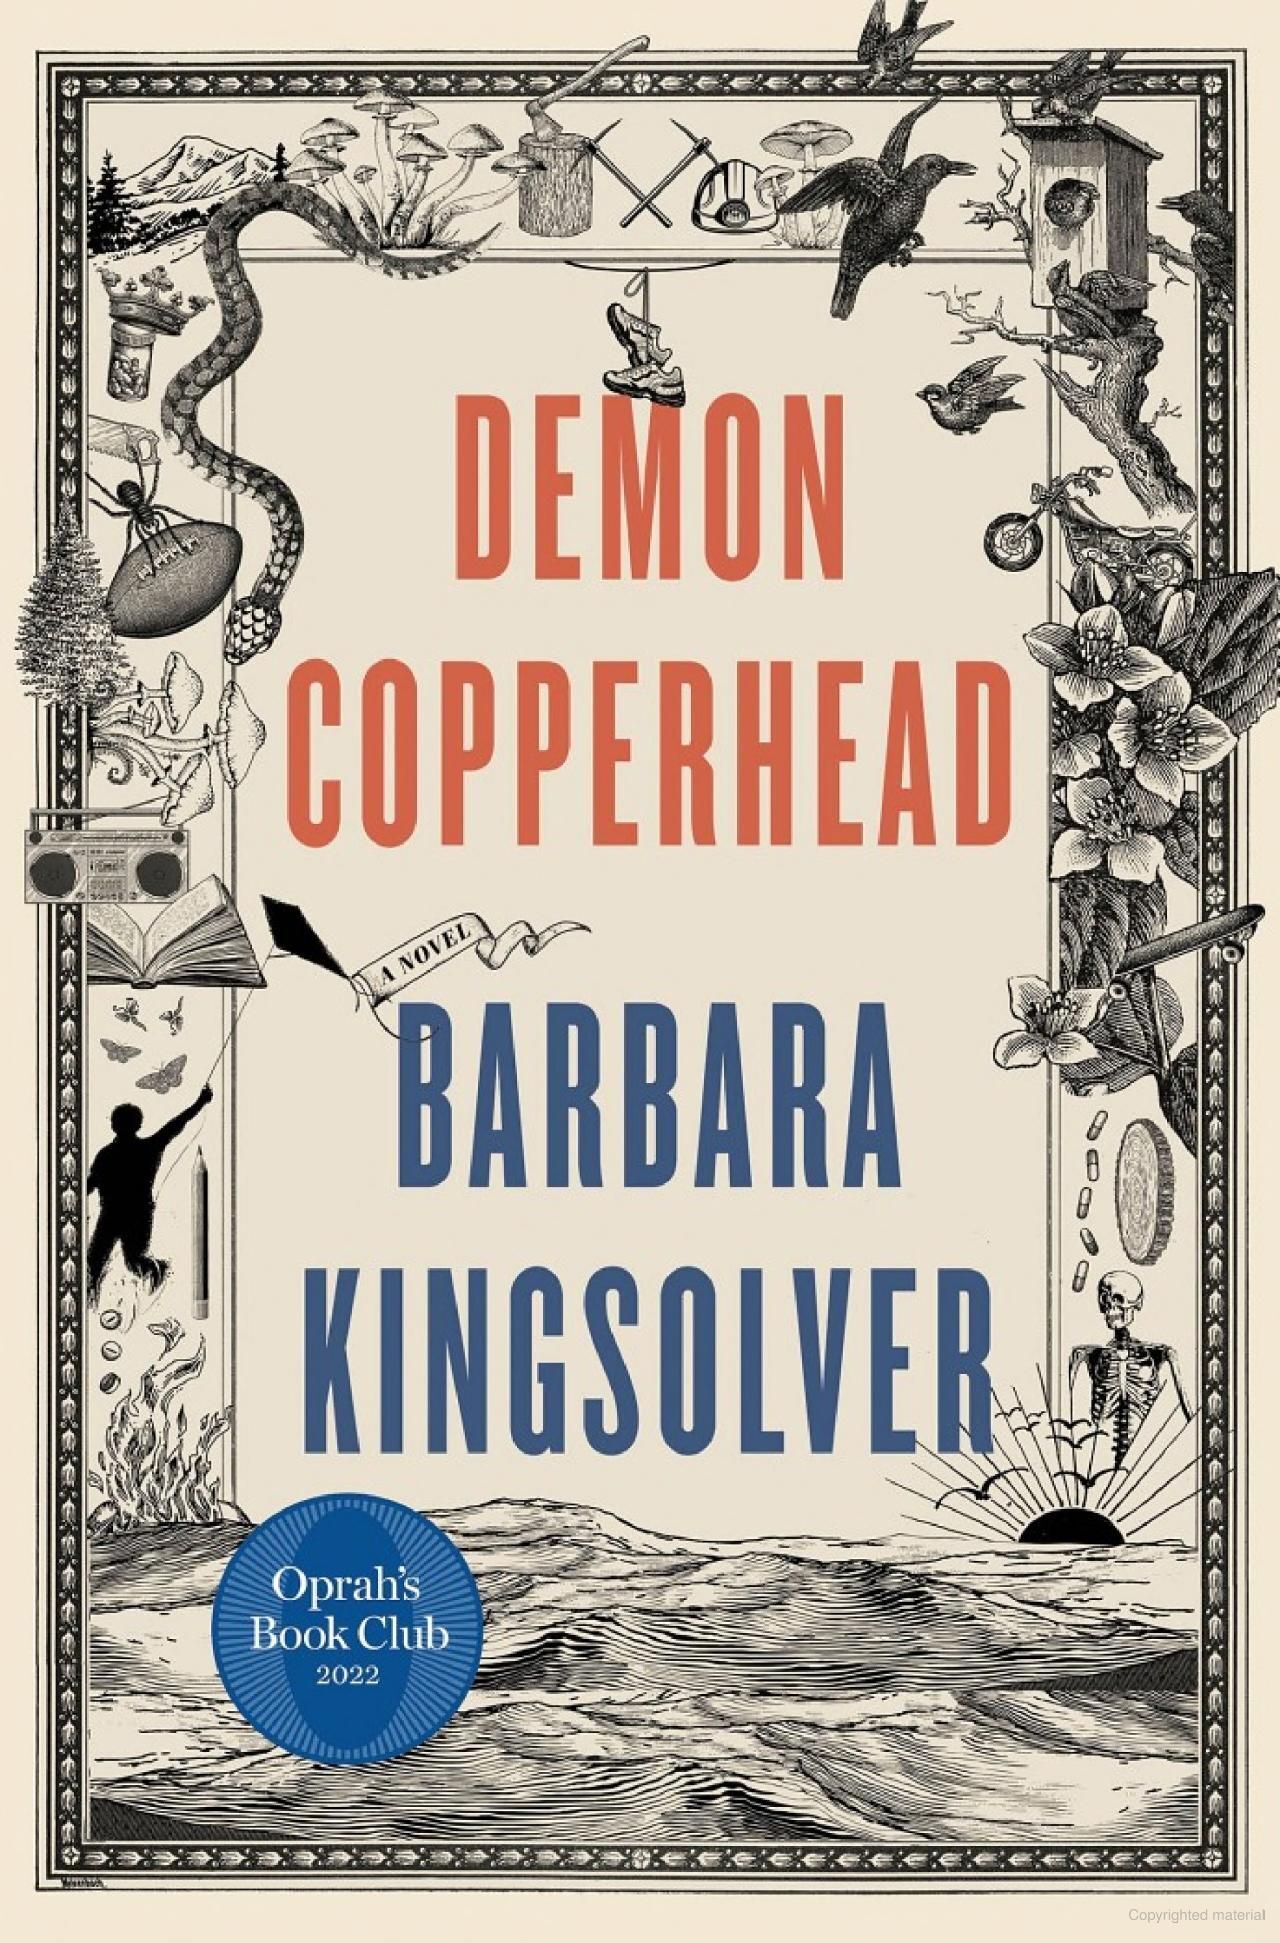 Federation Book Club Reads Demon Copperhead by Barbara Kingsolver